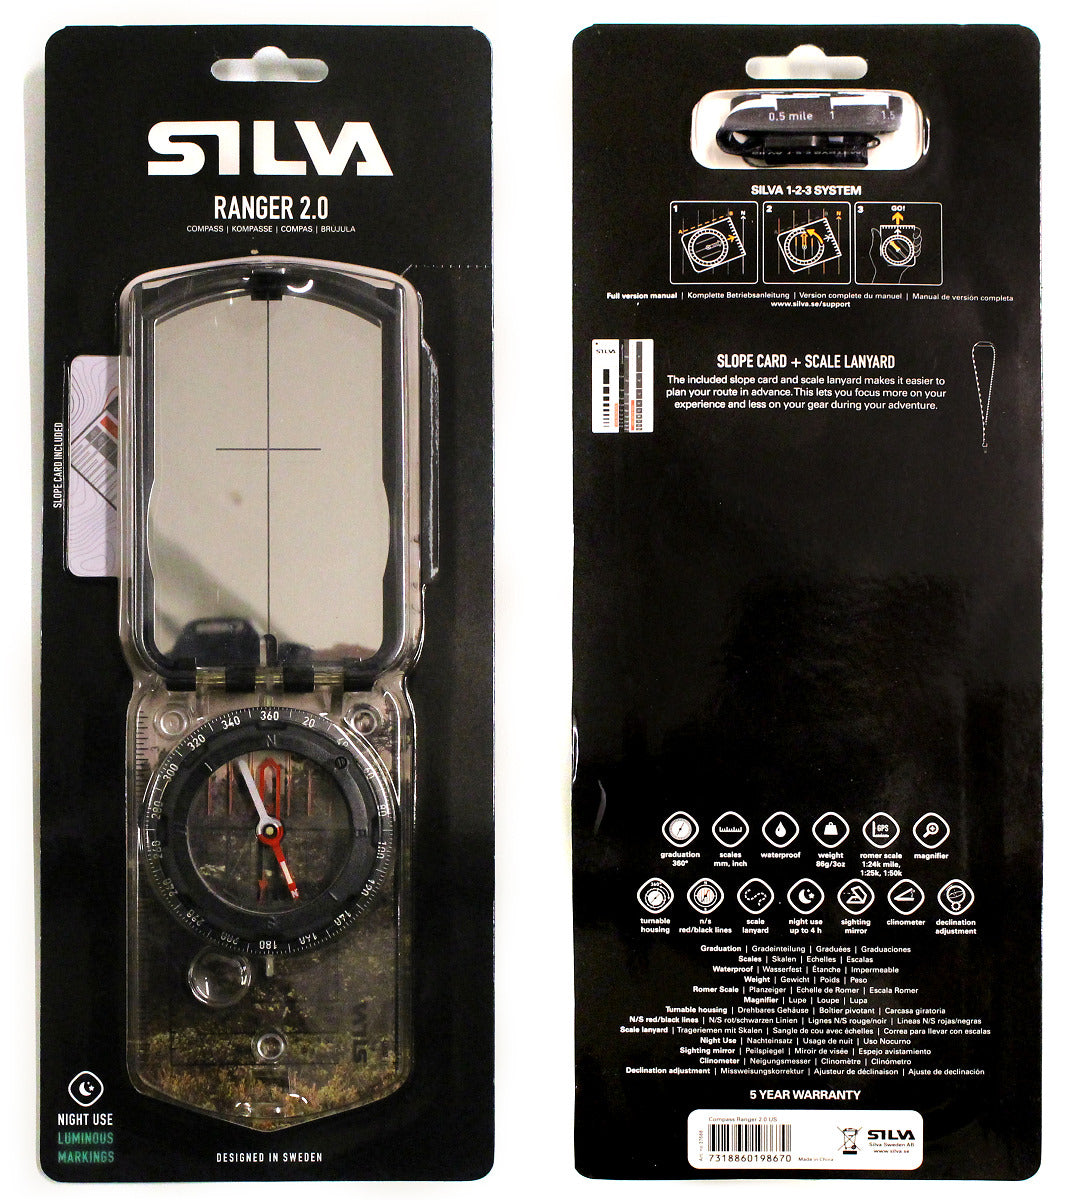 Silva Ranger 2.0 Mirror Compass - Black - in packaging